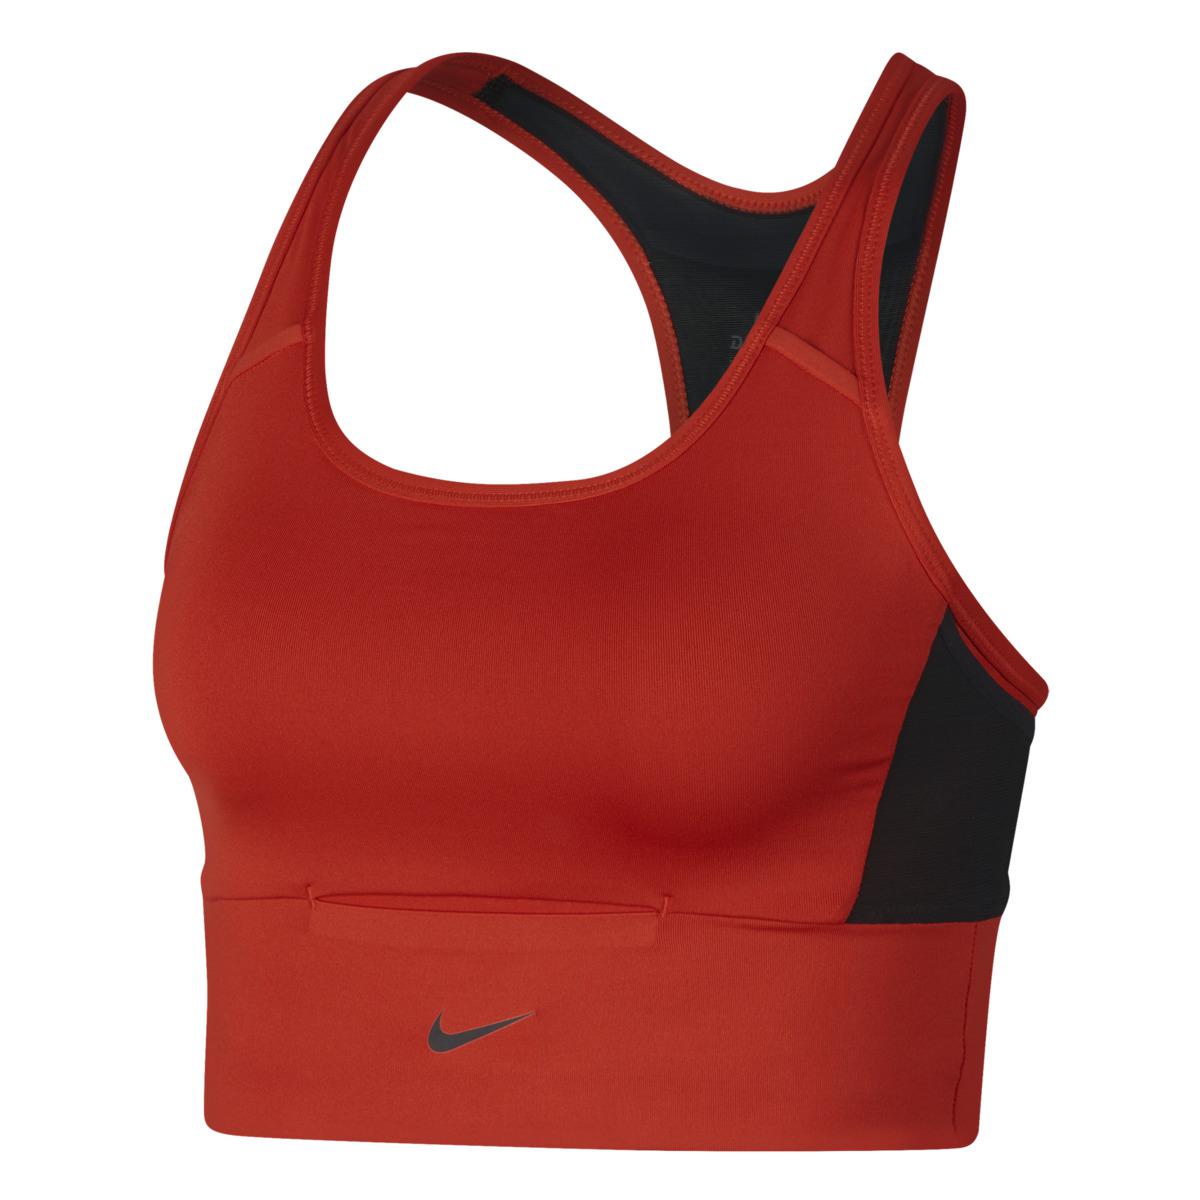 Nike Synthetic Swoosh Pocket Sports Bra in Red - Lyst